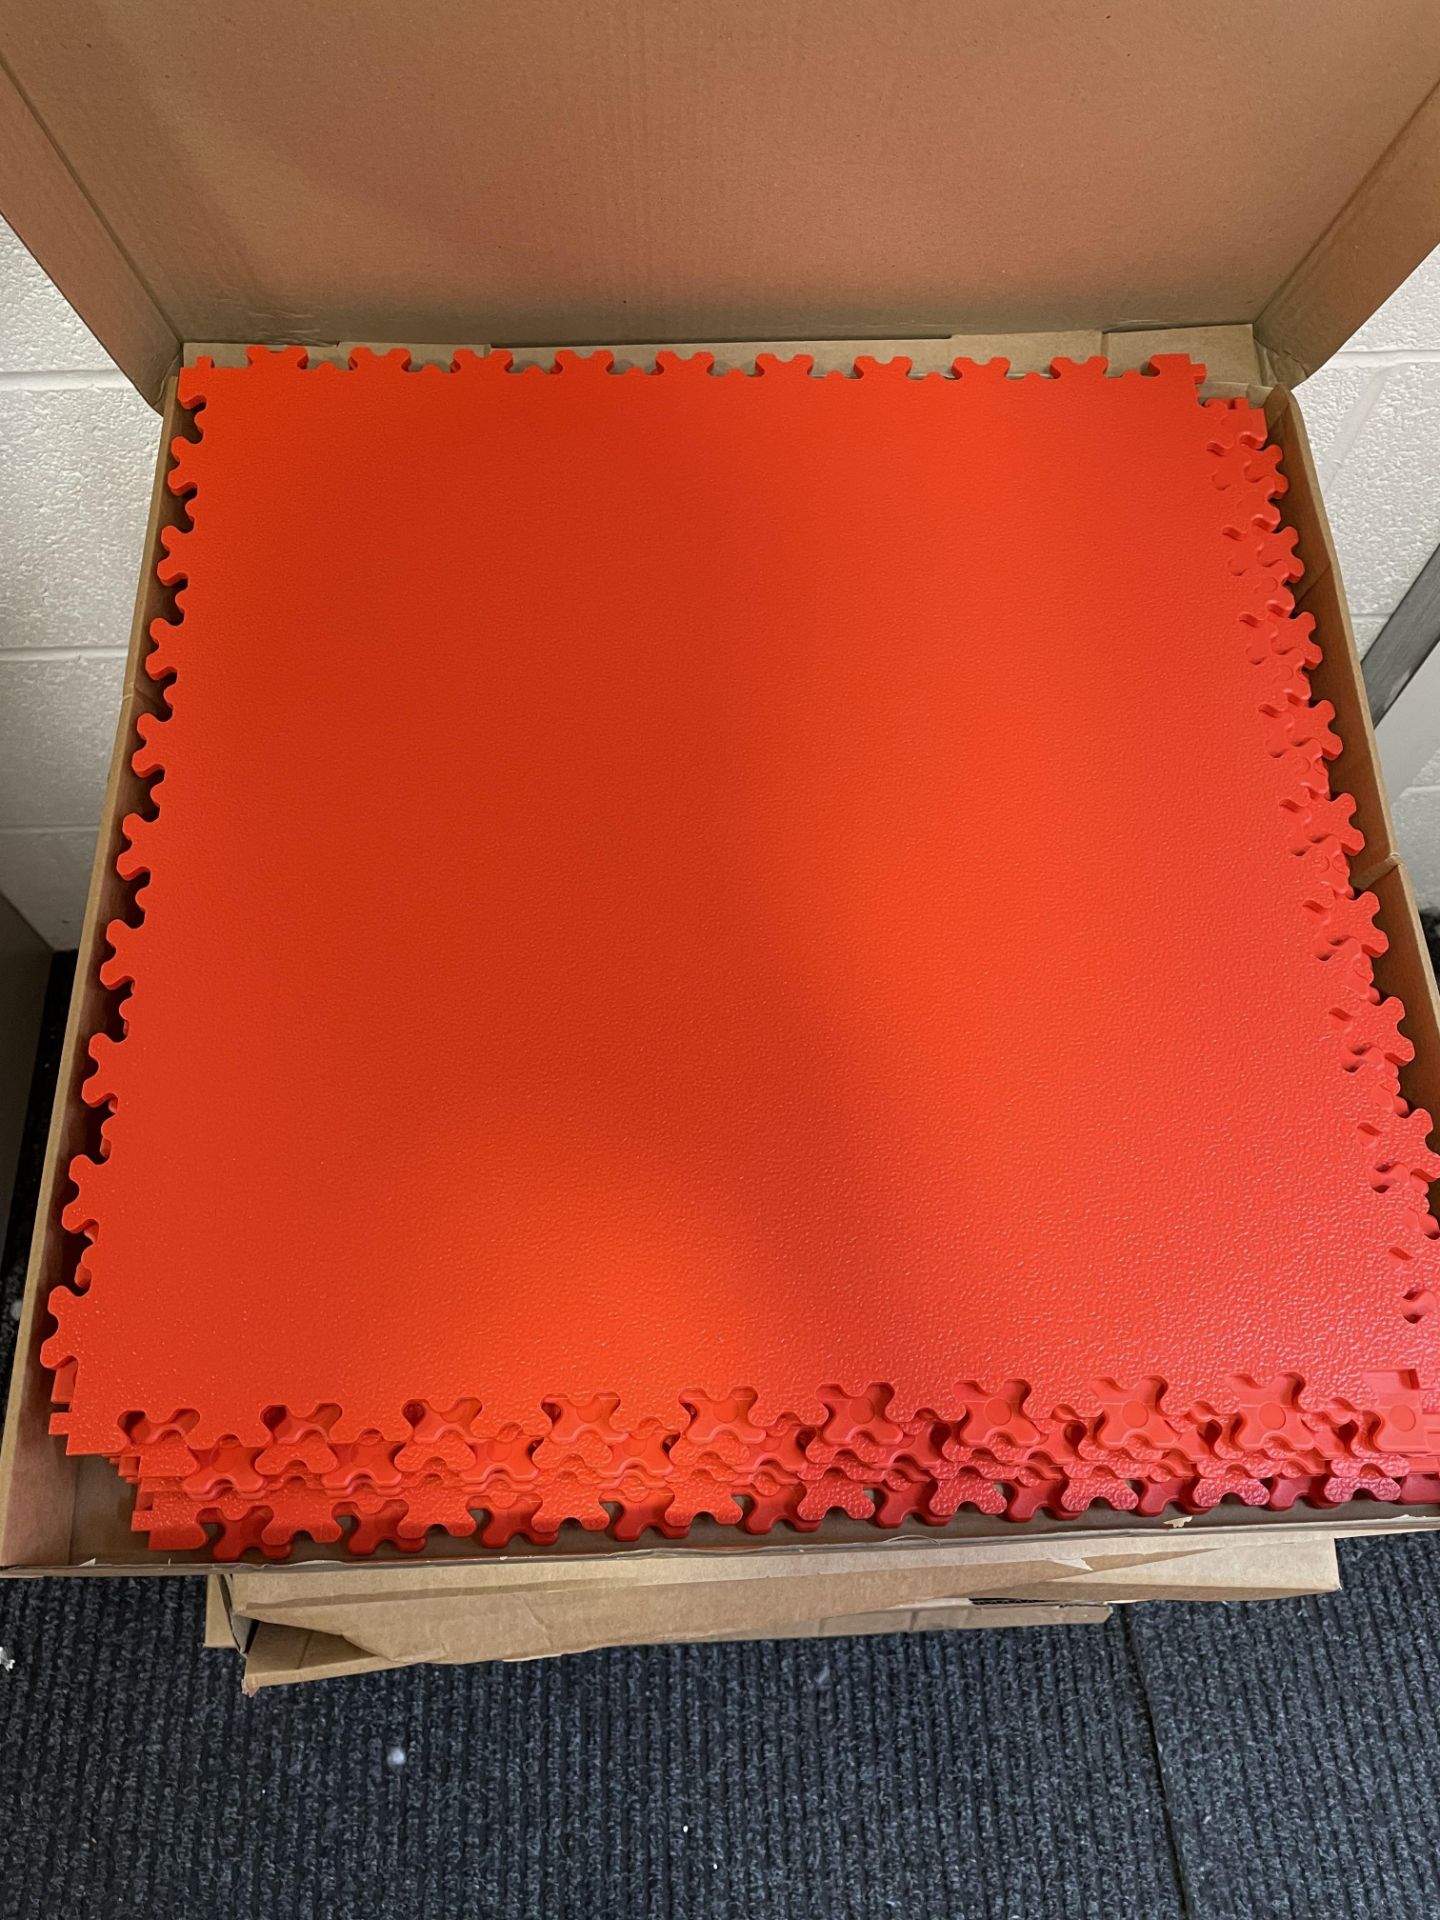 14 x Boxes (112 Tiles) R-Tek Interlocking Commercial Floor Tiles | 510 x 510mm (28m2) - Image 2 of 4